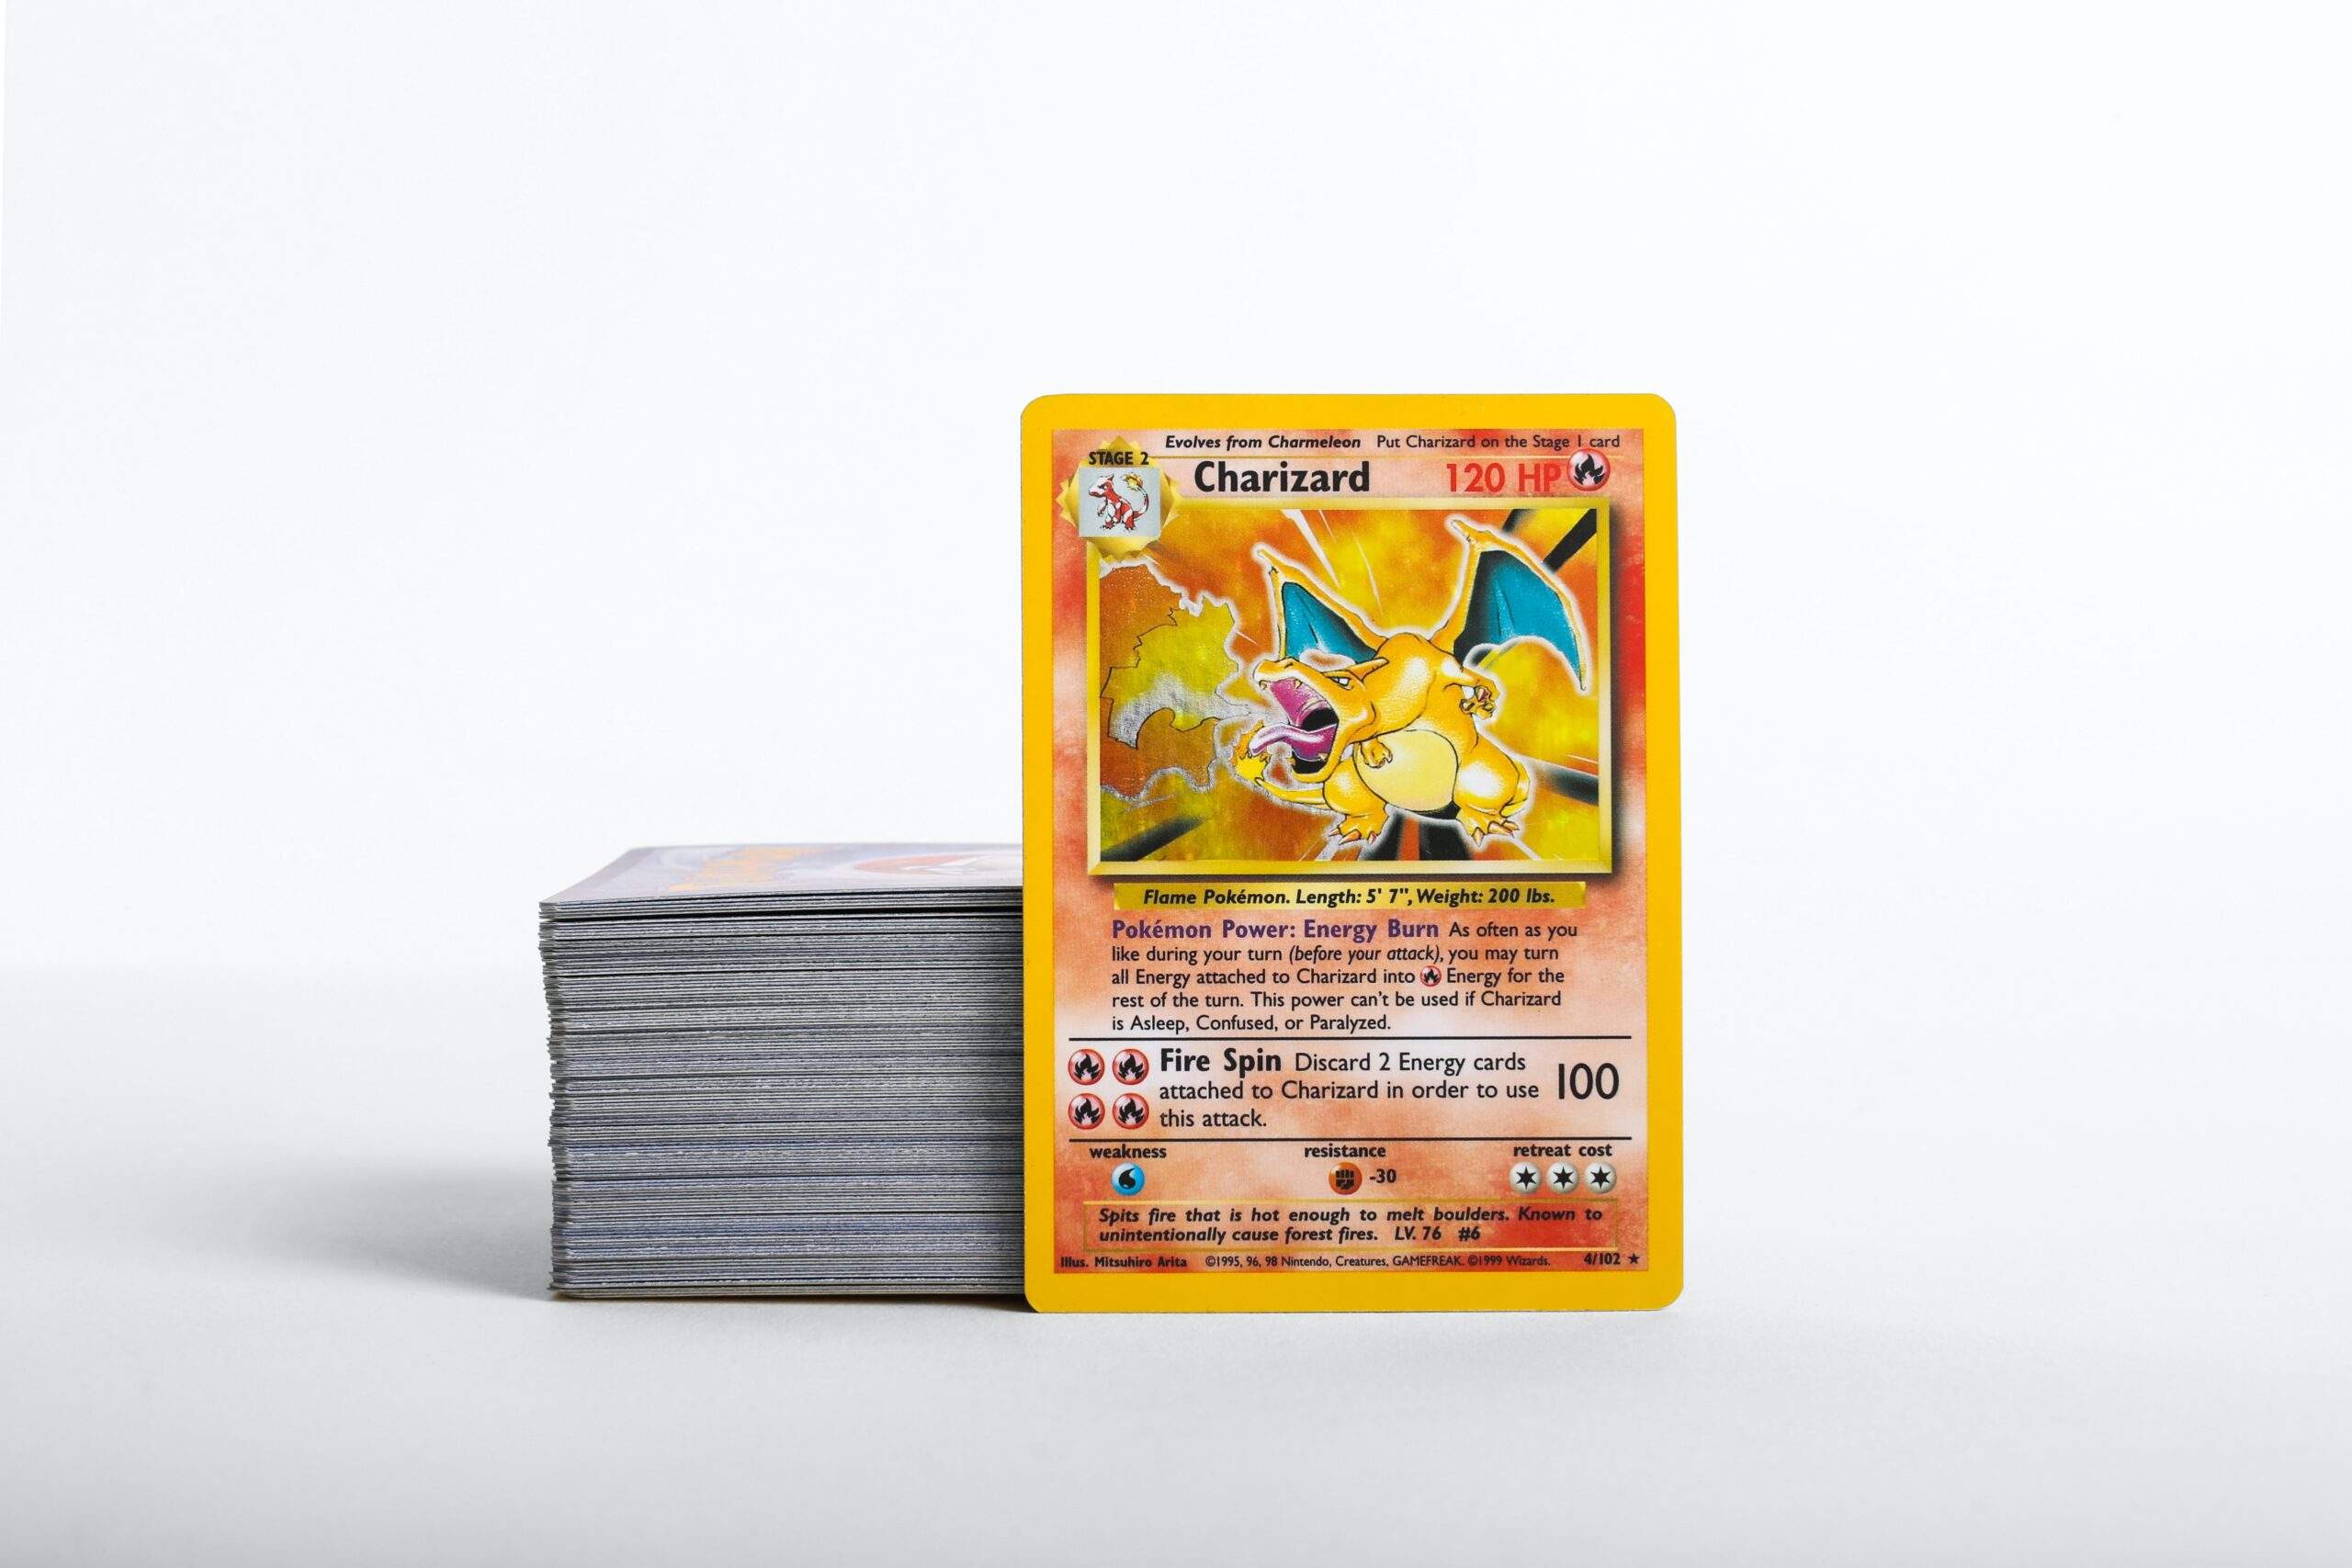 Top 6 Pikachu Pokemon Card Picks - MoneyMade